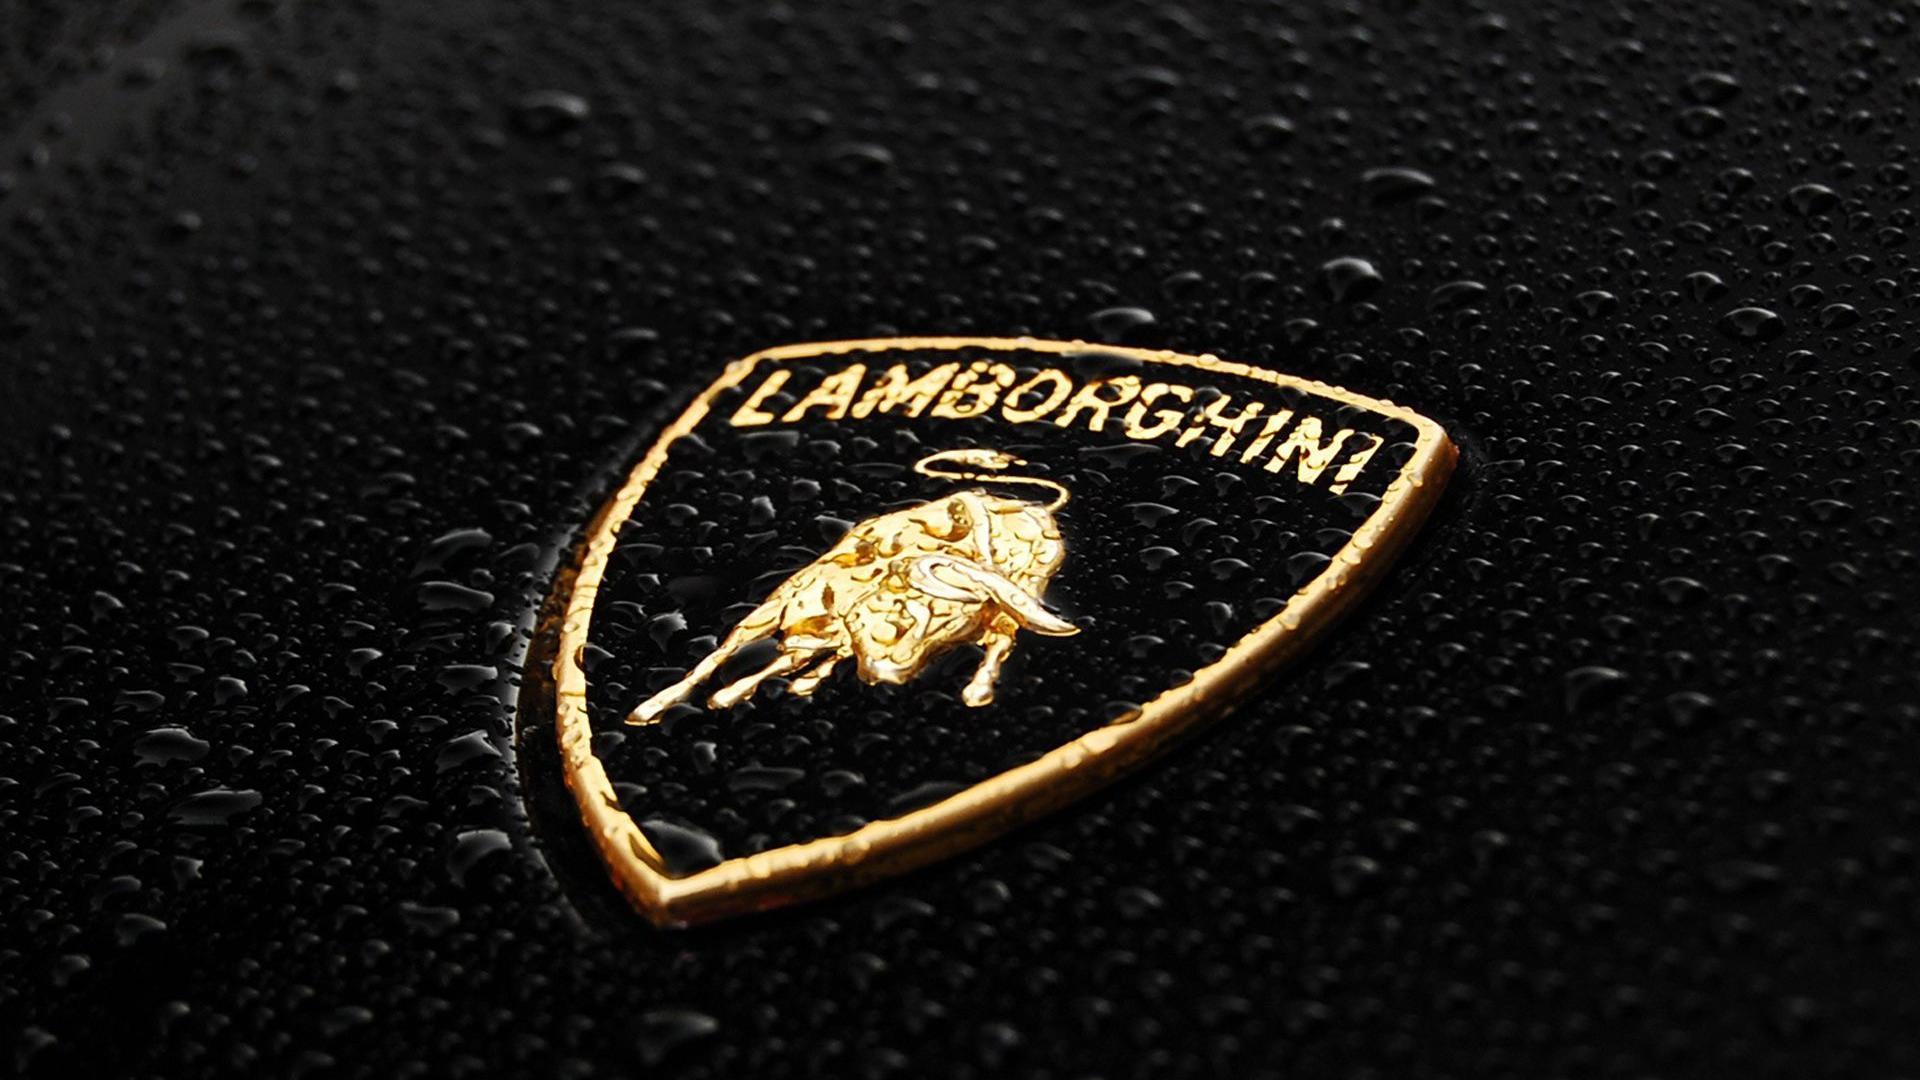 Lamborghini Car Company Logo HD Wallpaper. Cars Background